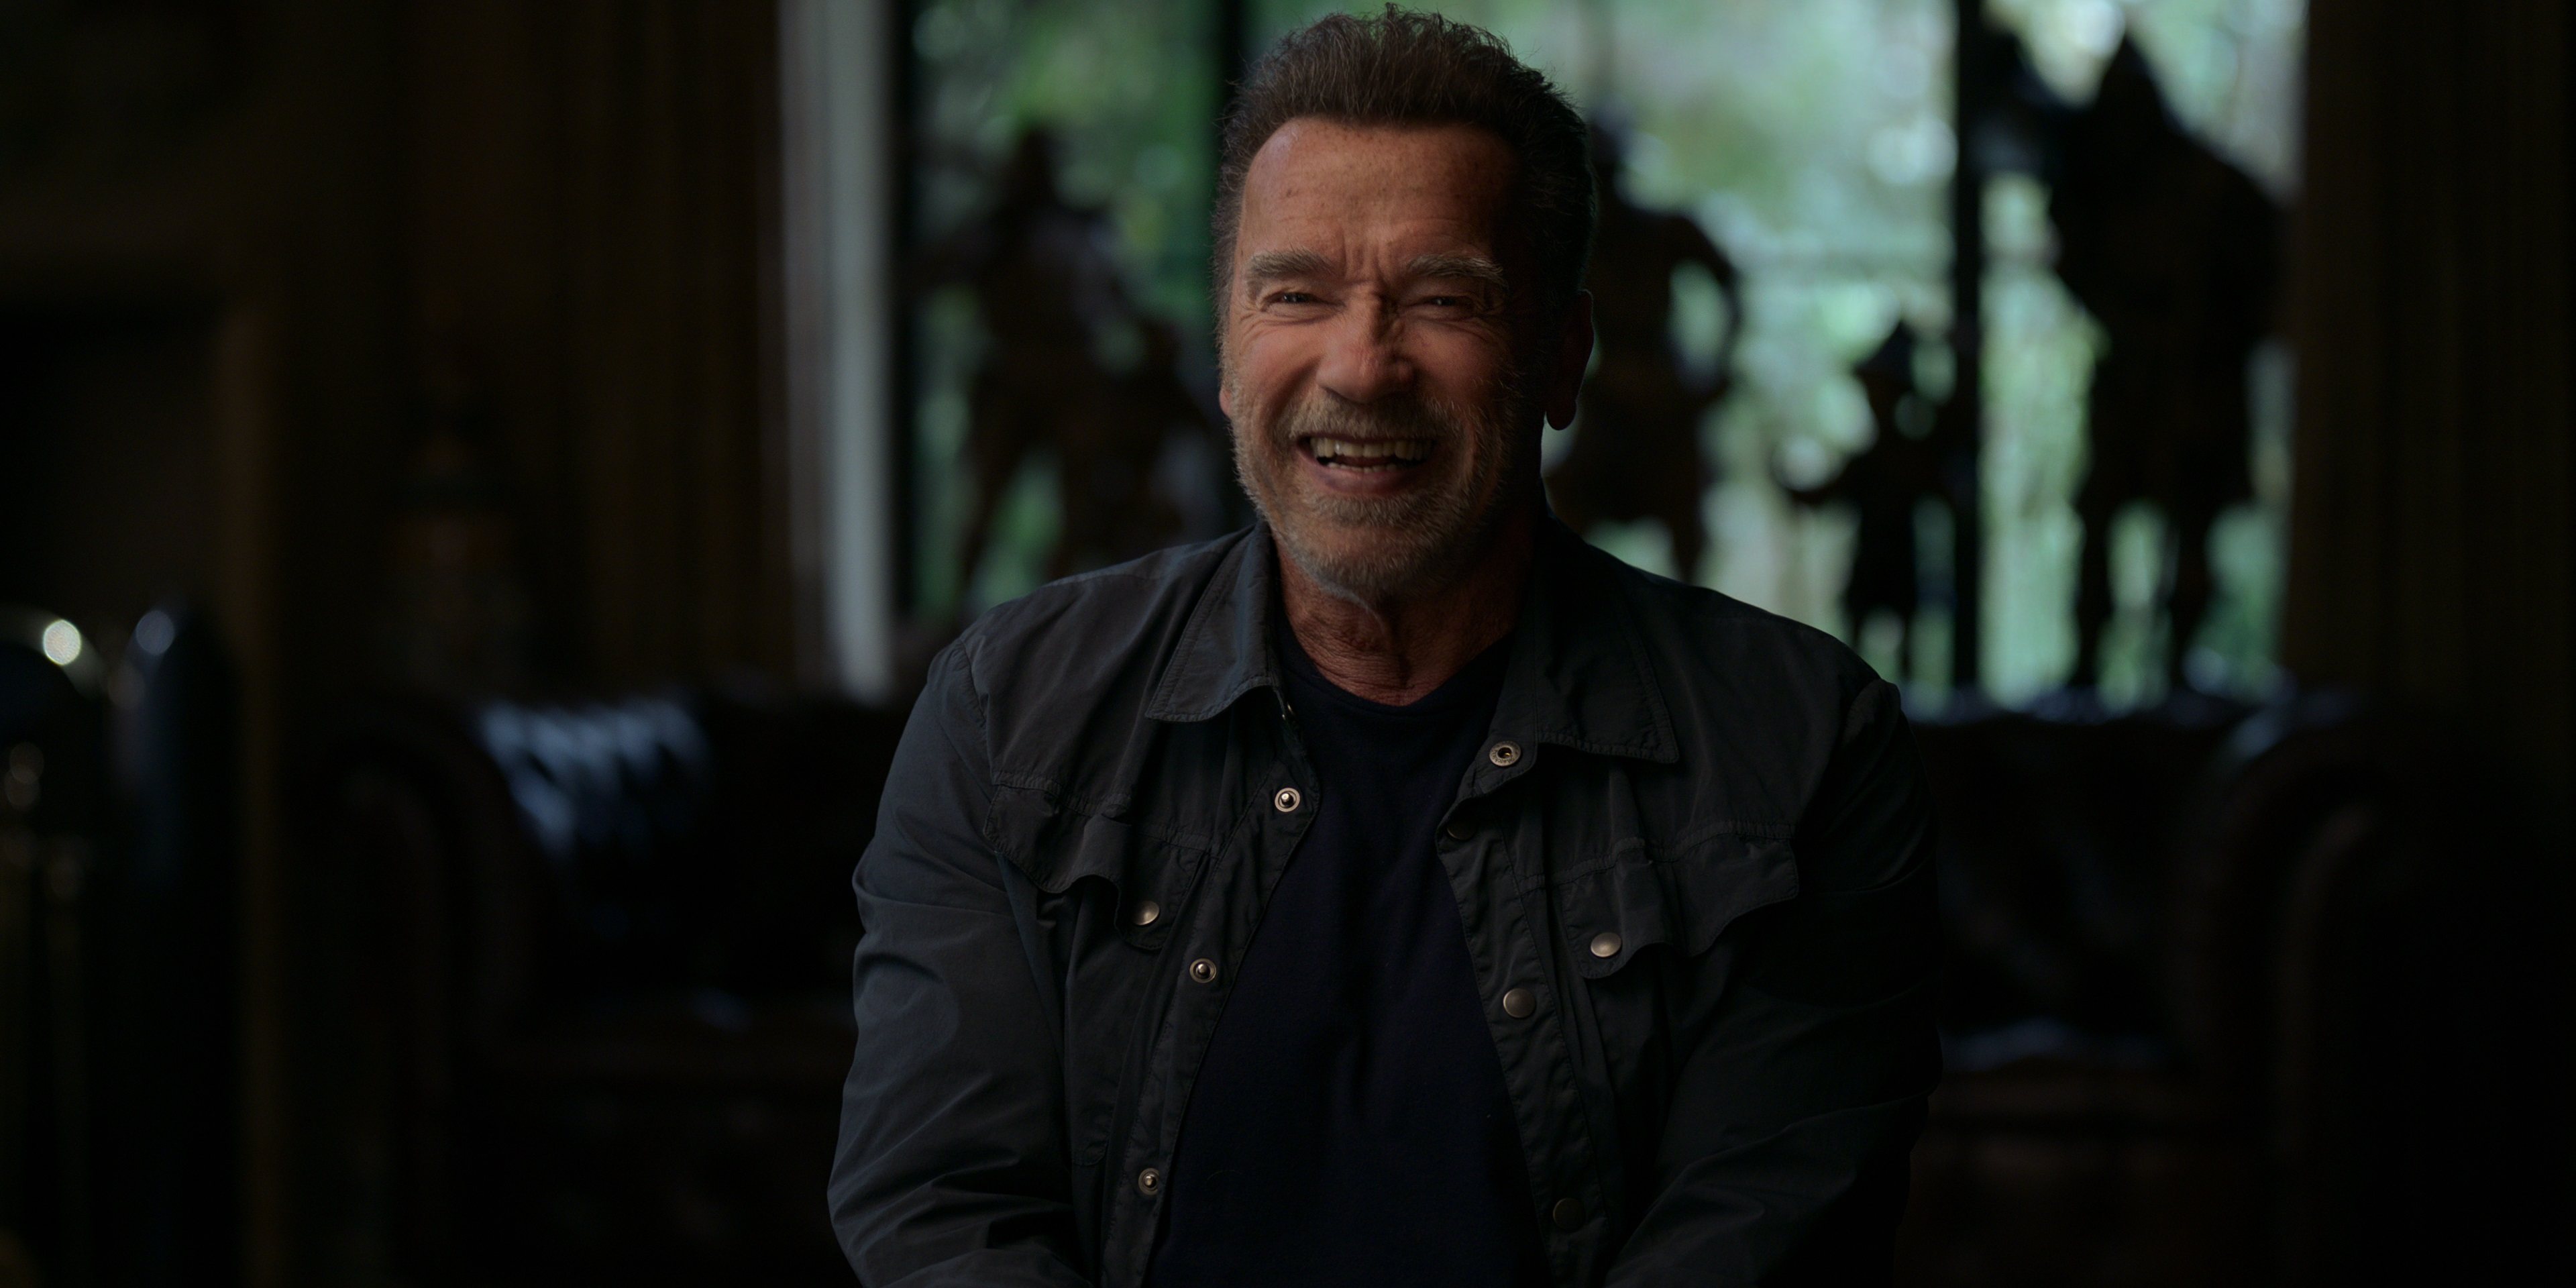 Arnold Schwarzenegger in a still from “Arnold”. Photo: Netflix